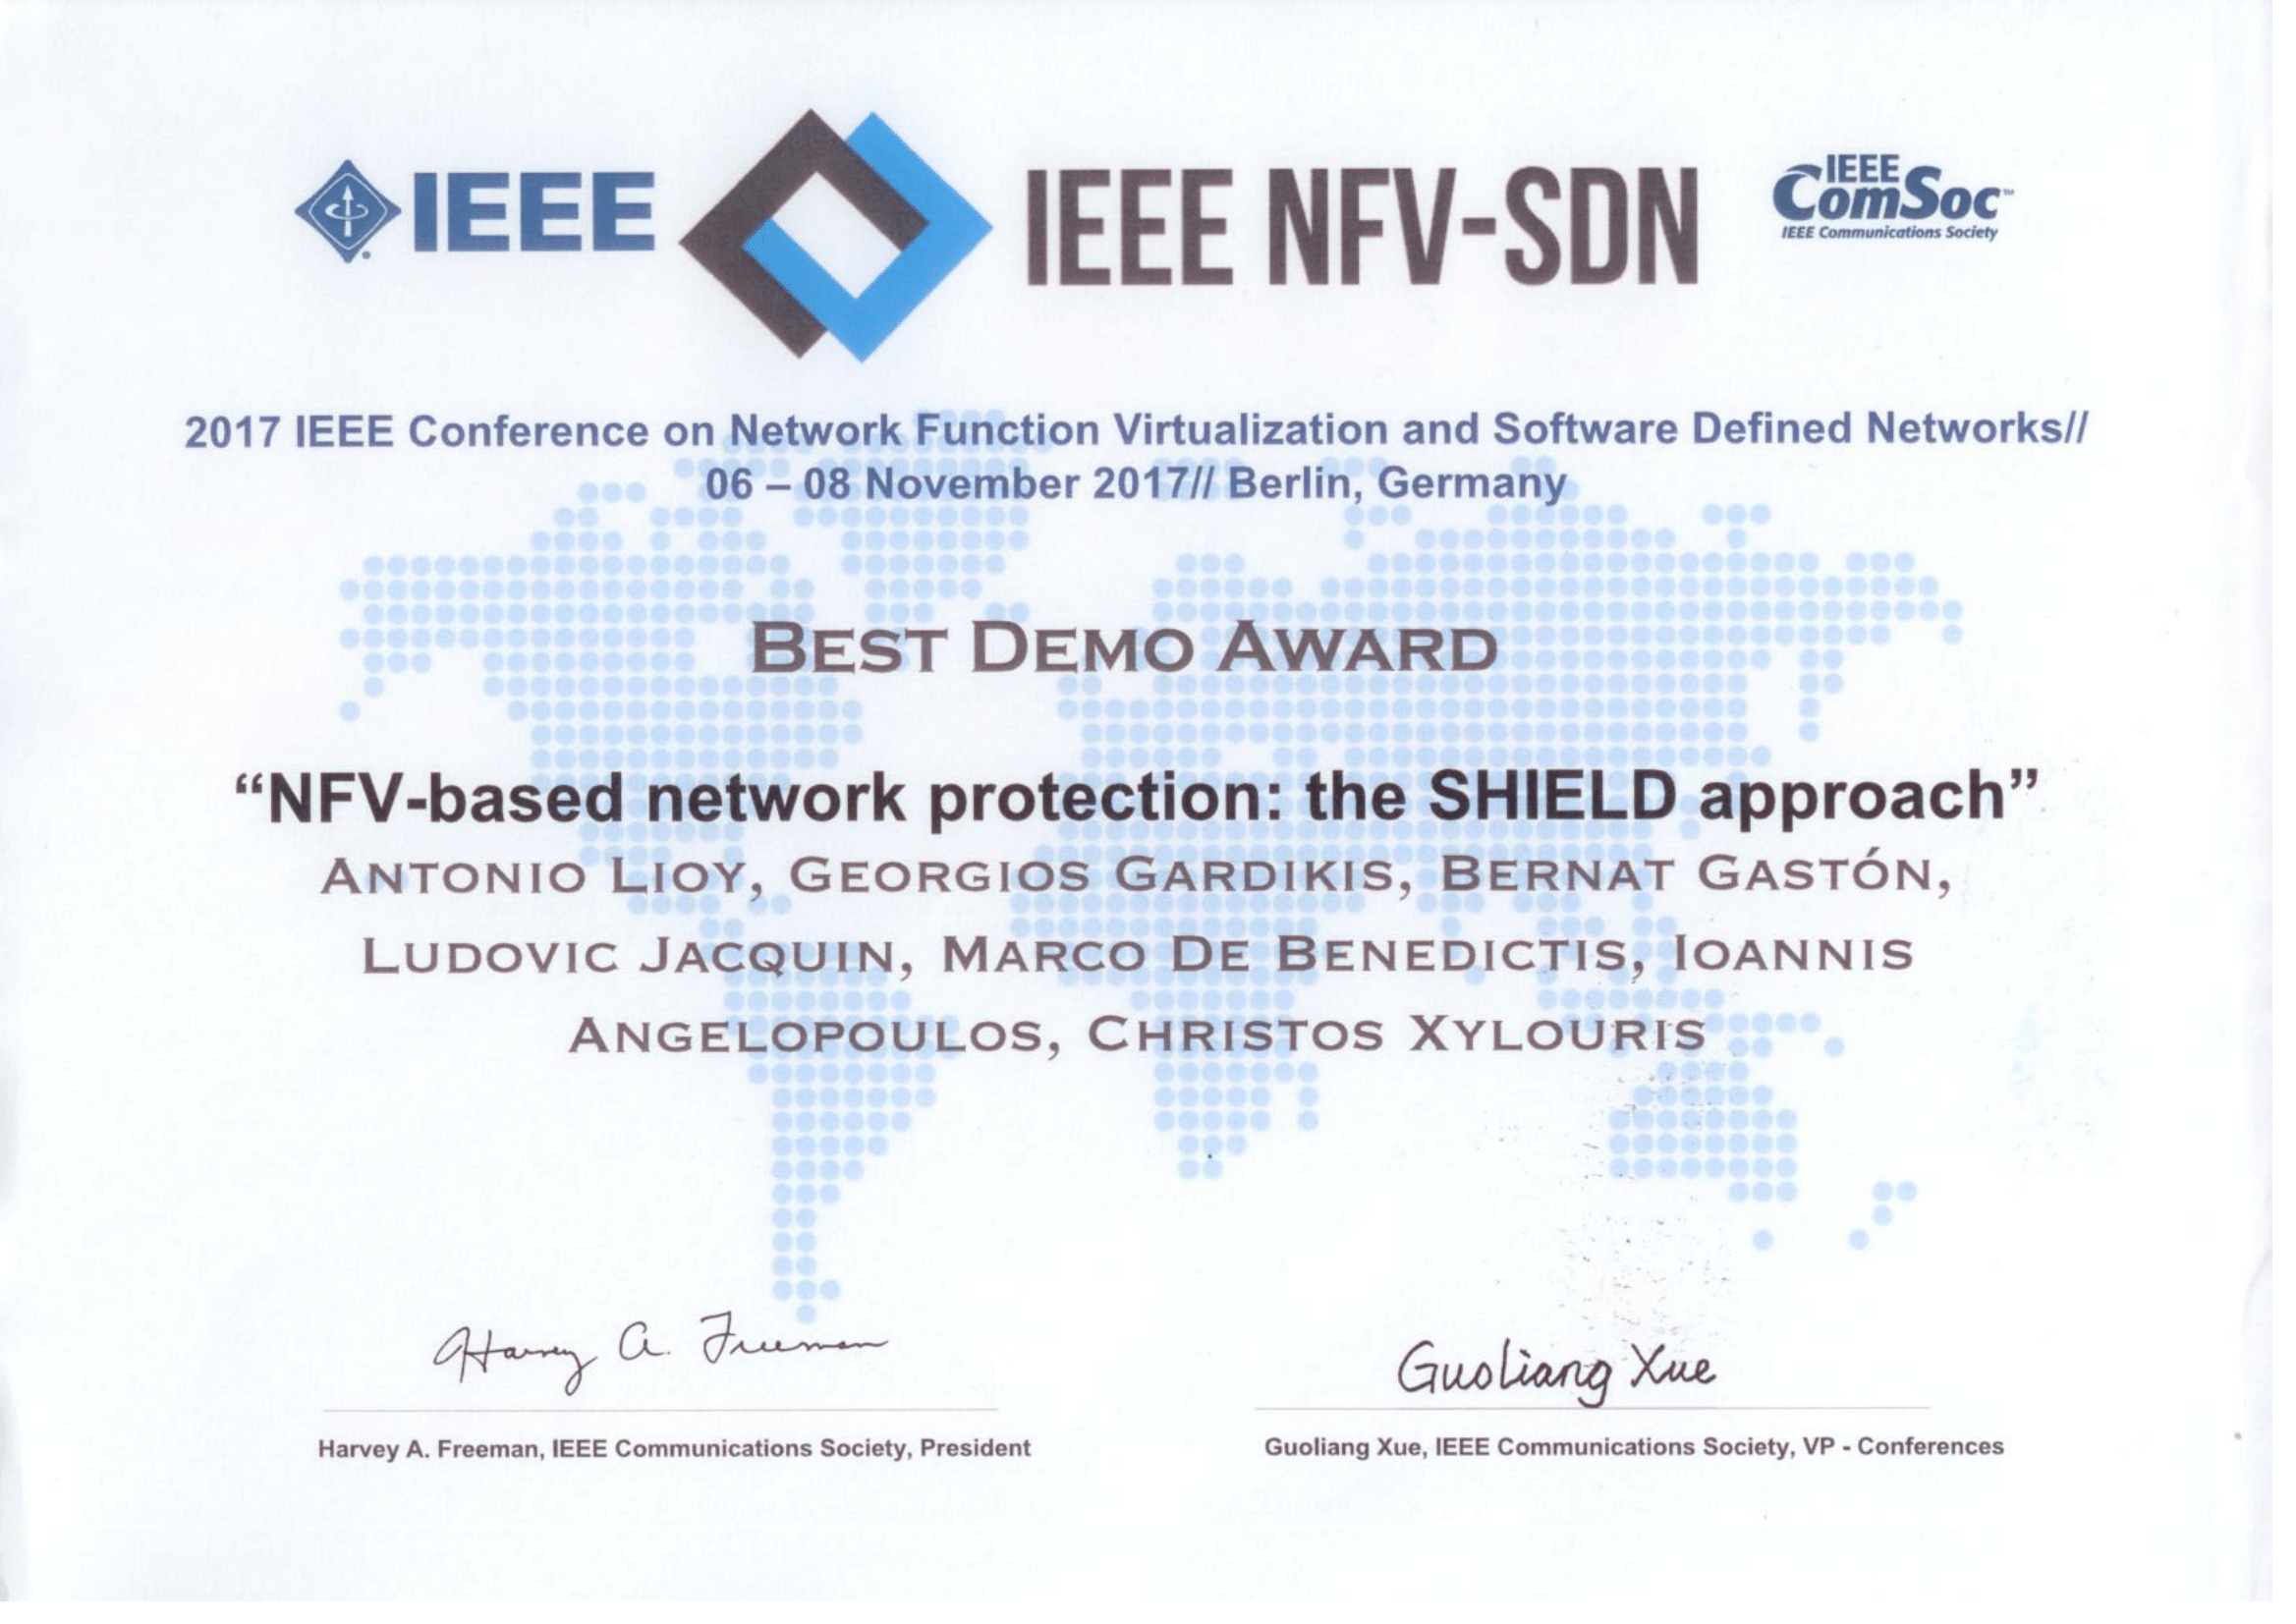 SHIELD best demo award at IEEE NFV-SDN 2017